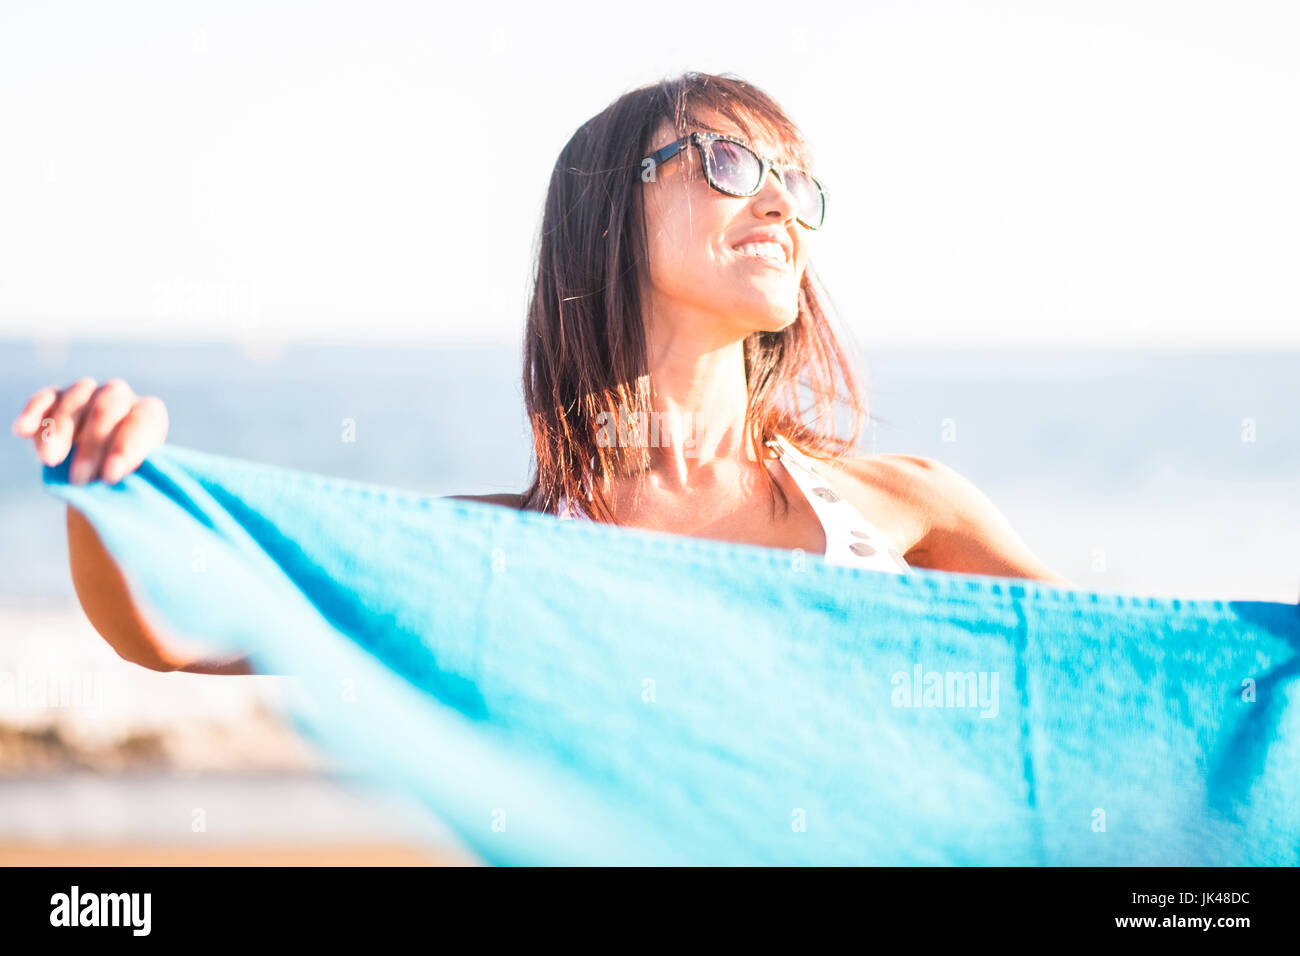 Caucasian woman holding blanket on beach Stock Photo